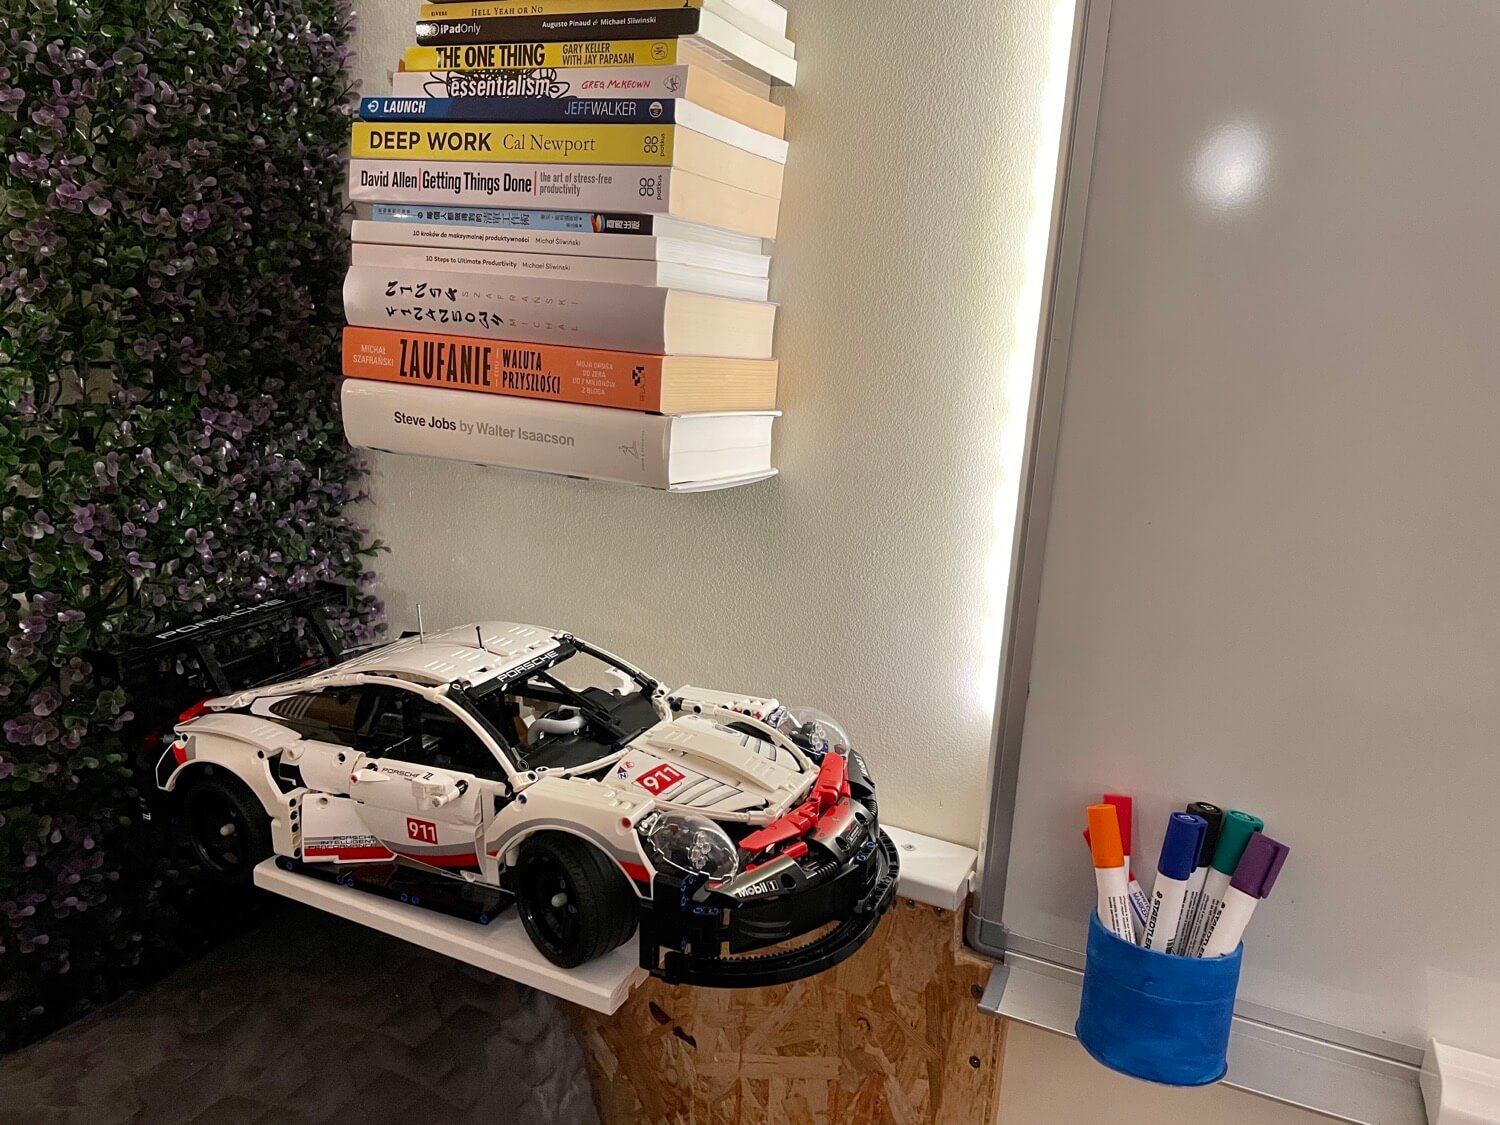 Another Porsche LEGO set - building the 911 RSR 9